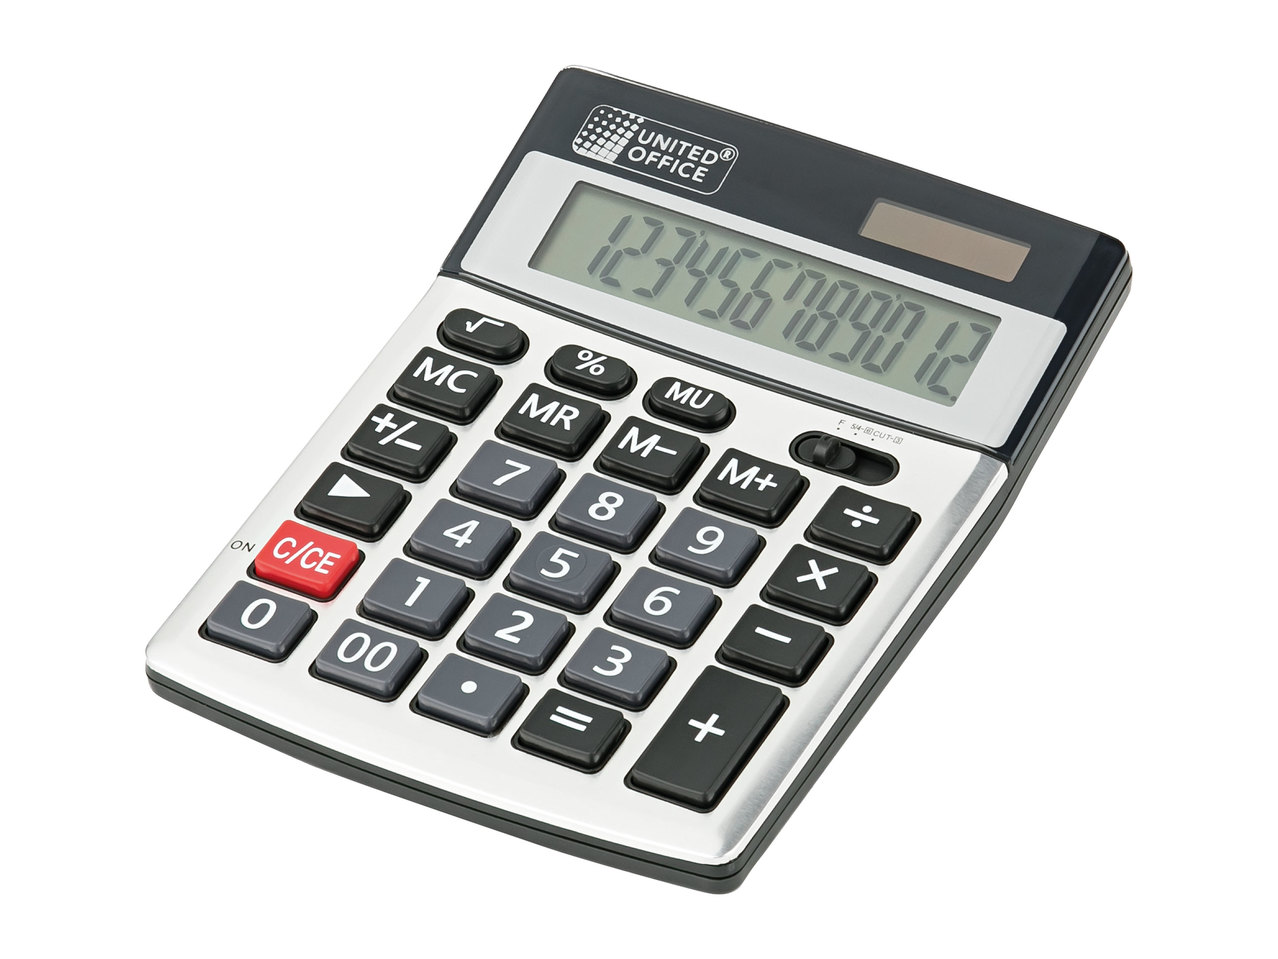 United Office Calculator1